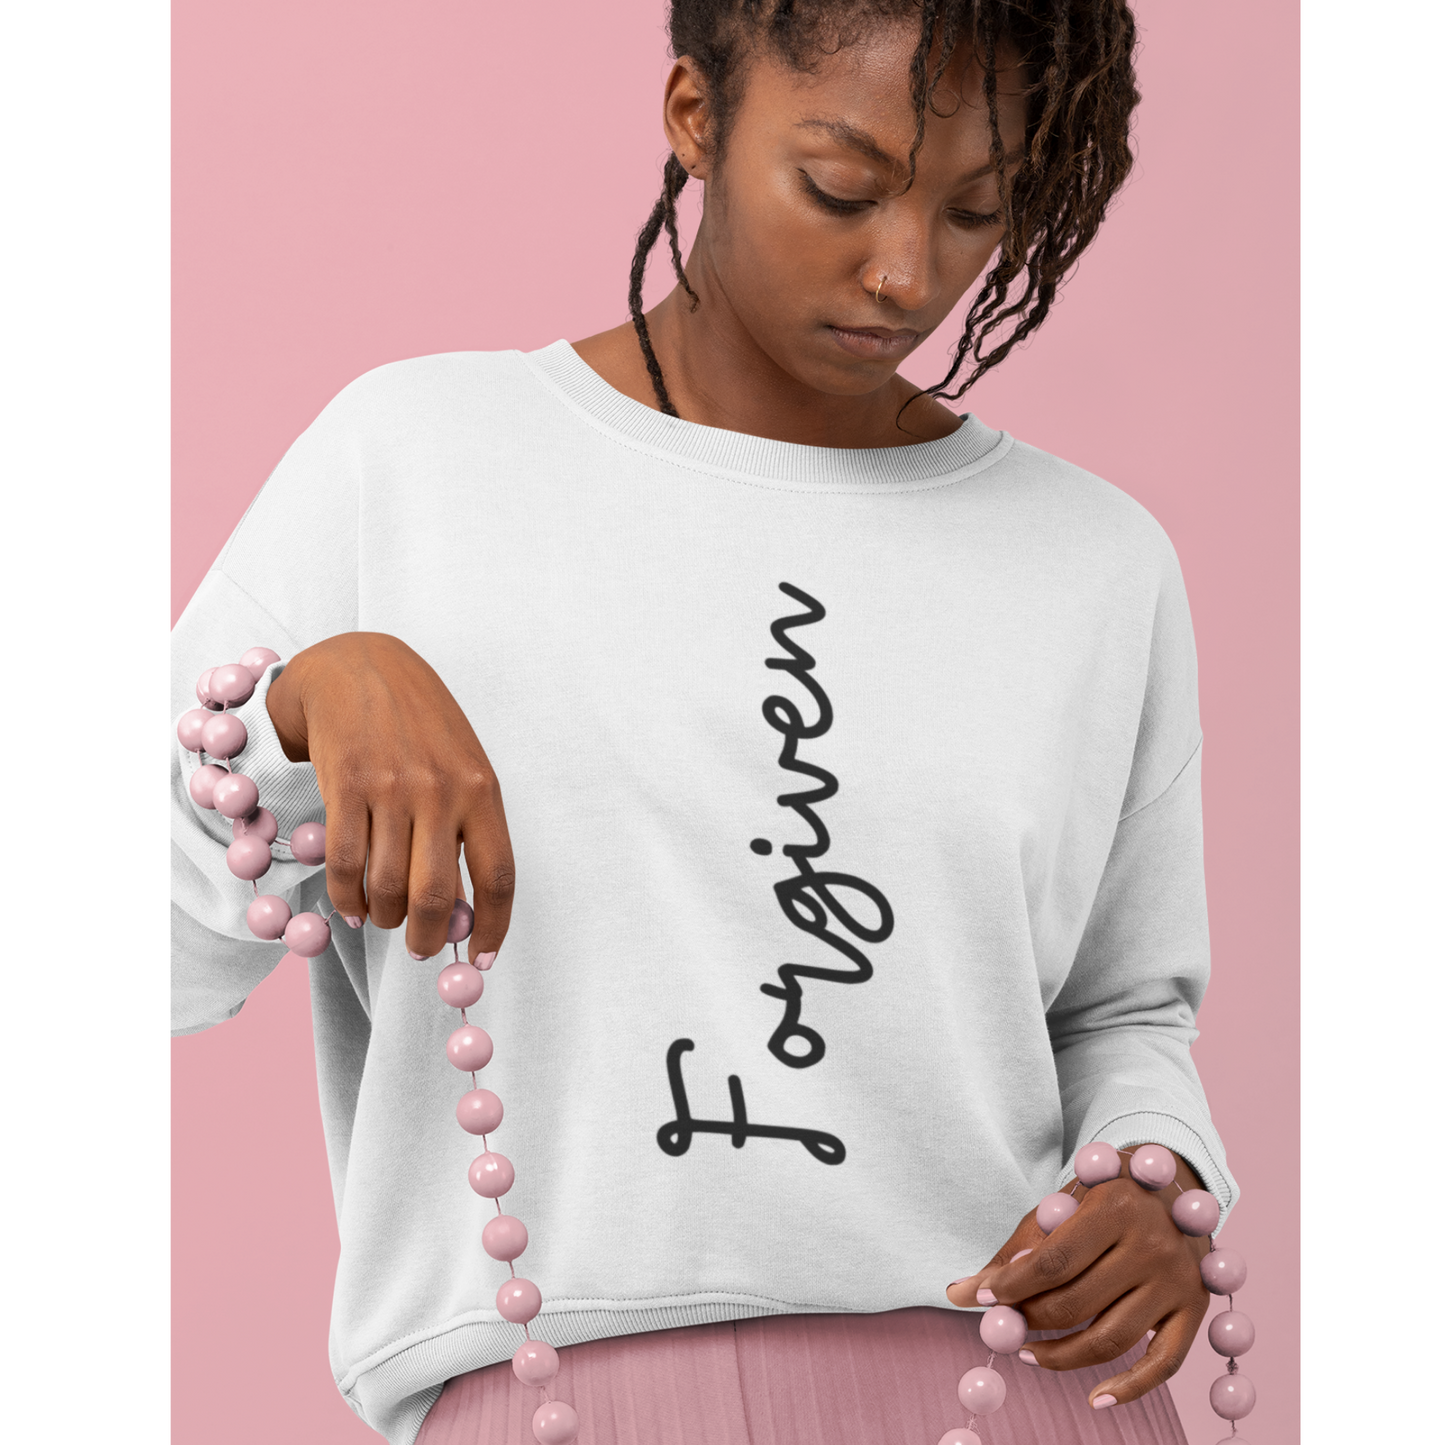 Forgiveness Sweatshirt, Women's Empowerment Sweatshirt, Christian Sweatshirt, Faith Apparel, Faith-Based Apparel, Christian Apparel